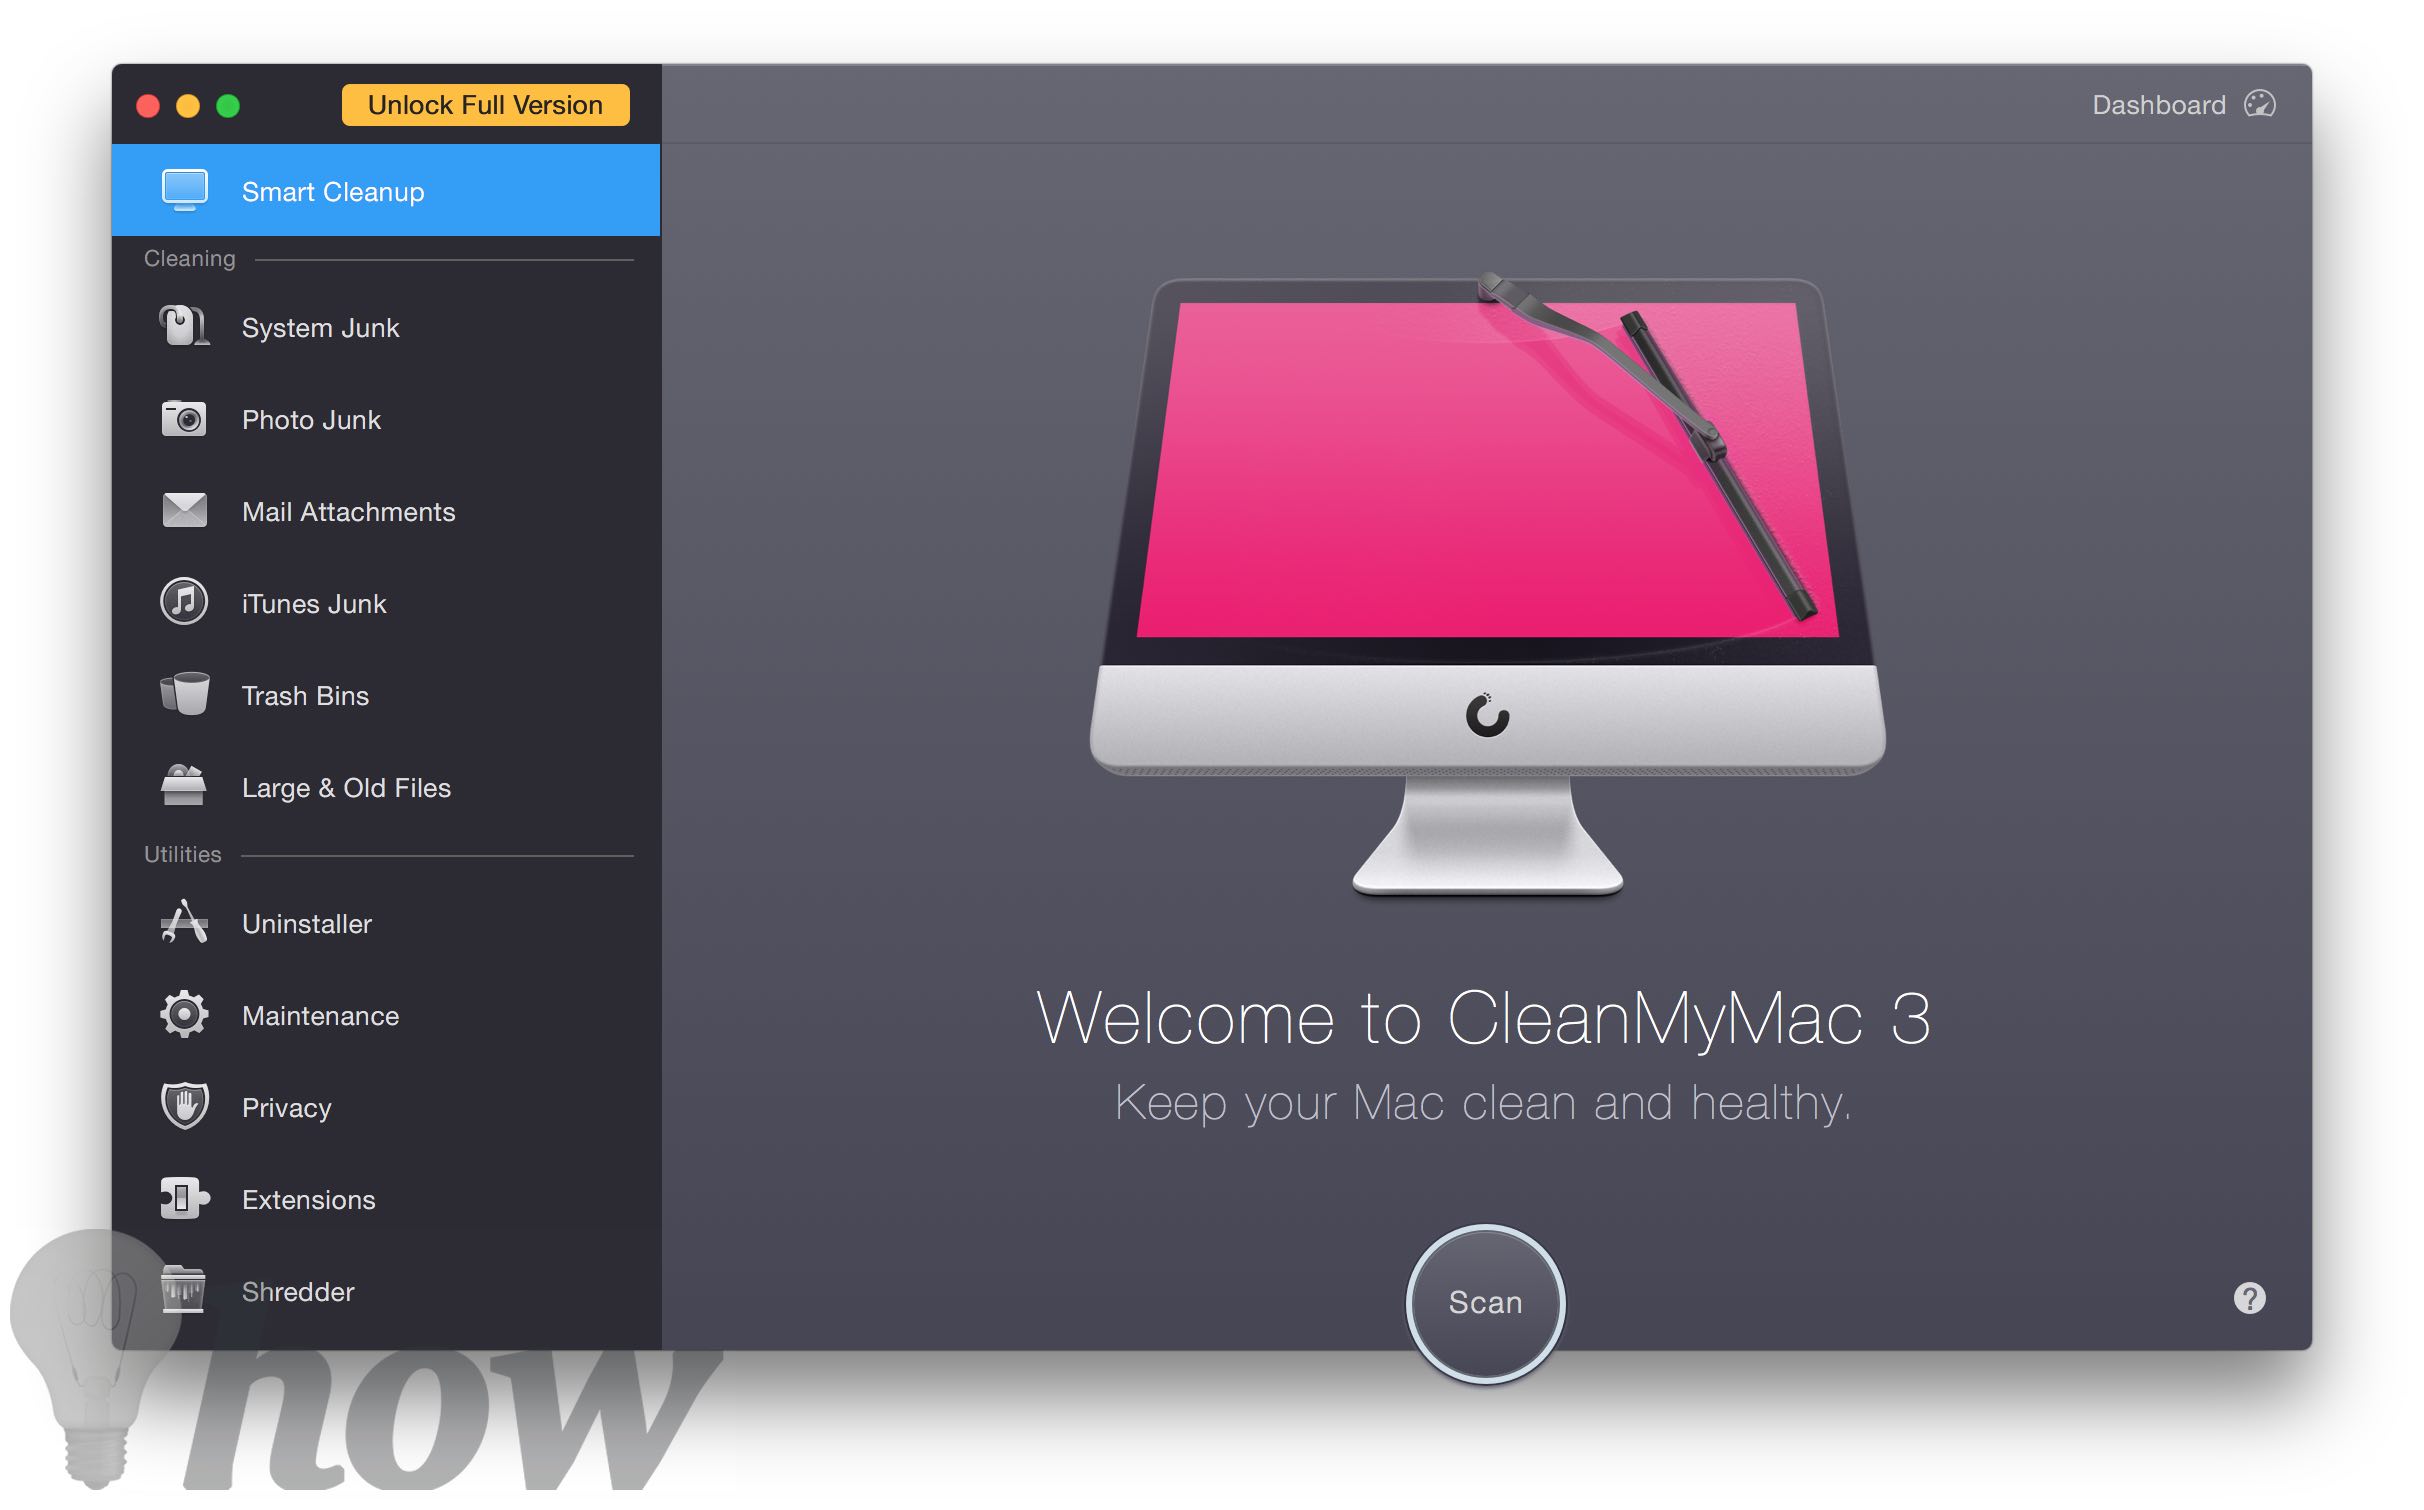 Clean mac computer screen